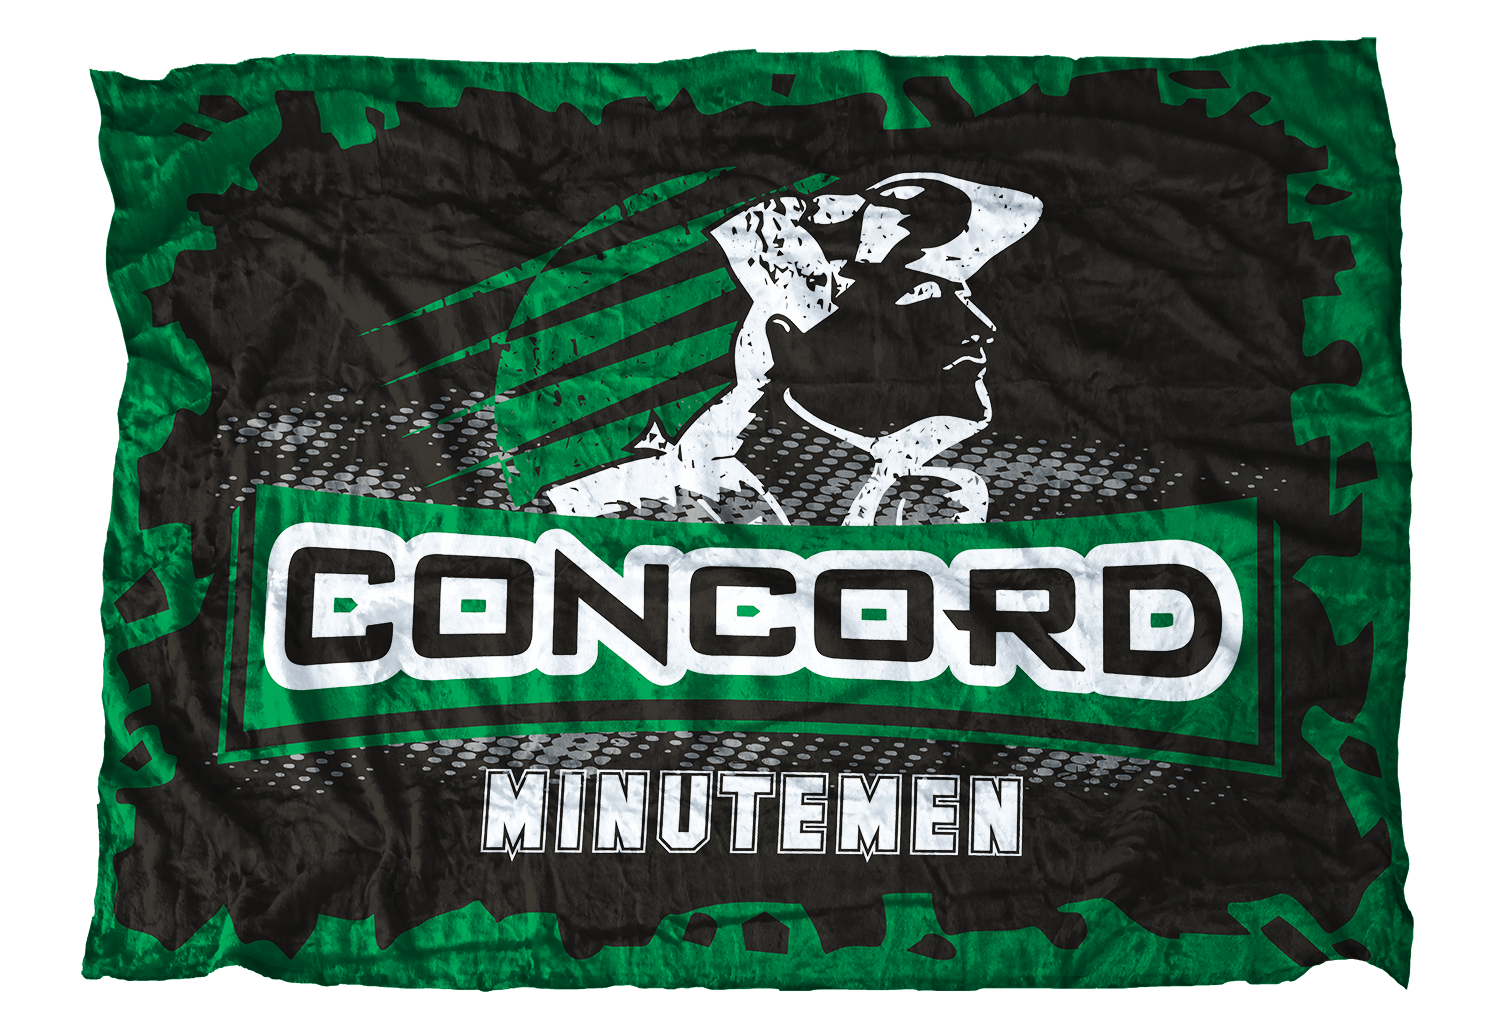 Concord Minutemen